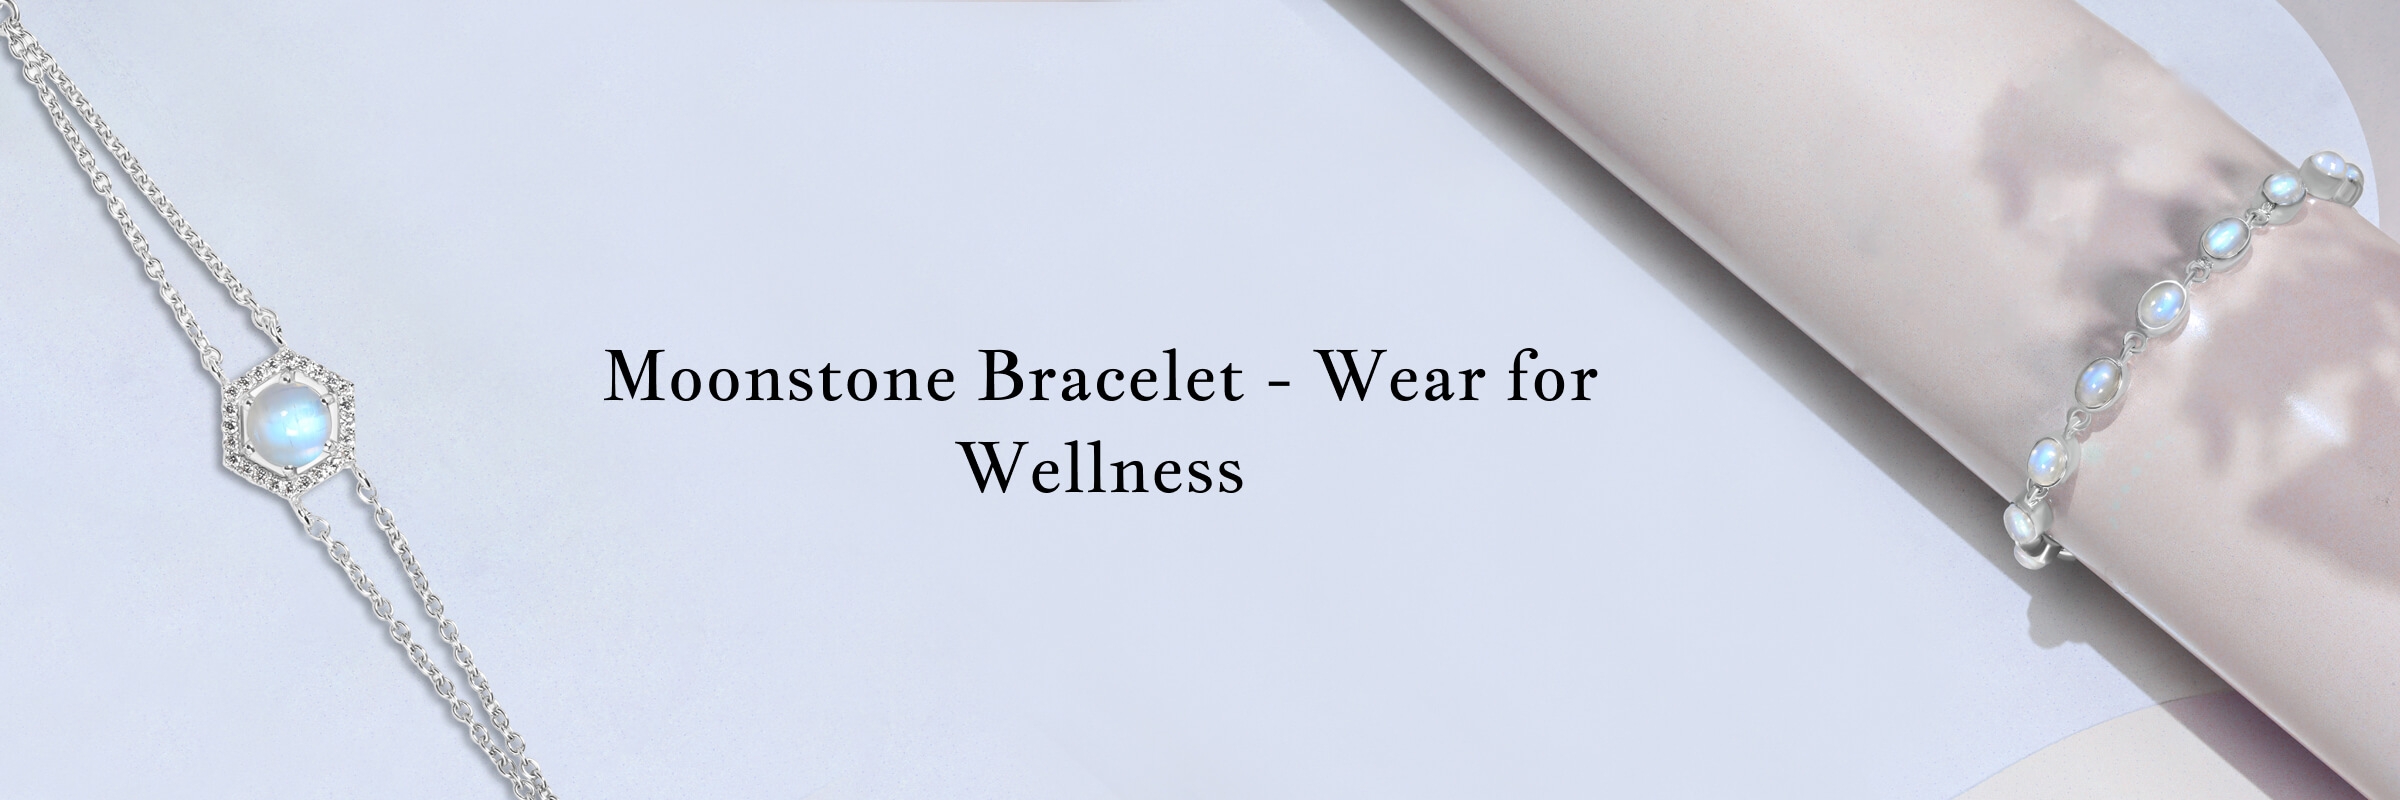 Benefits of wearing Moonstone bracelet